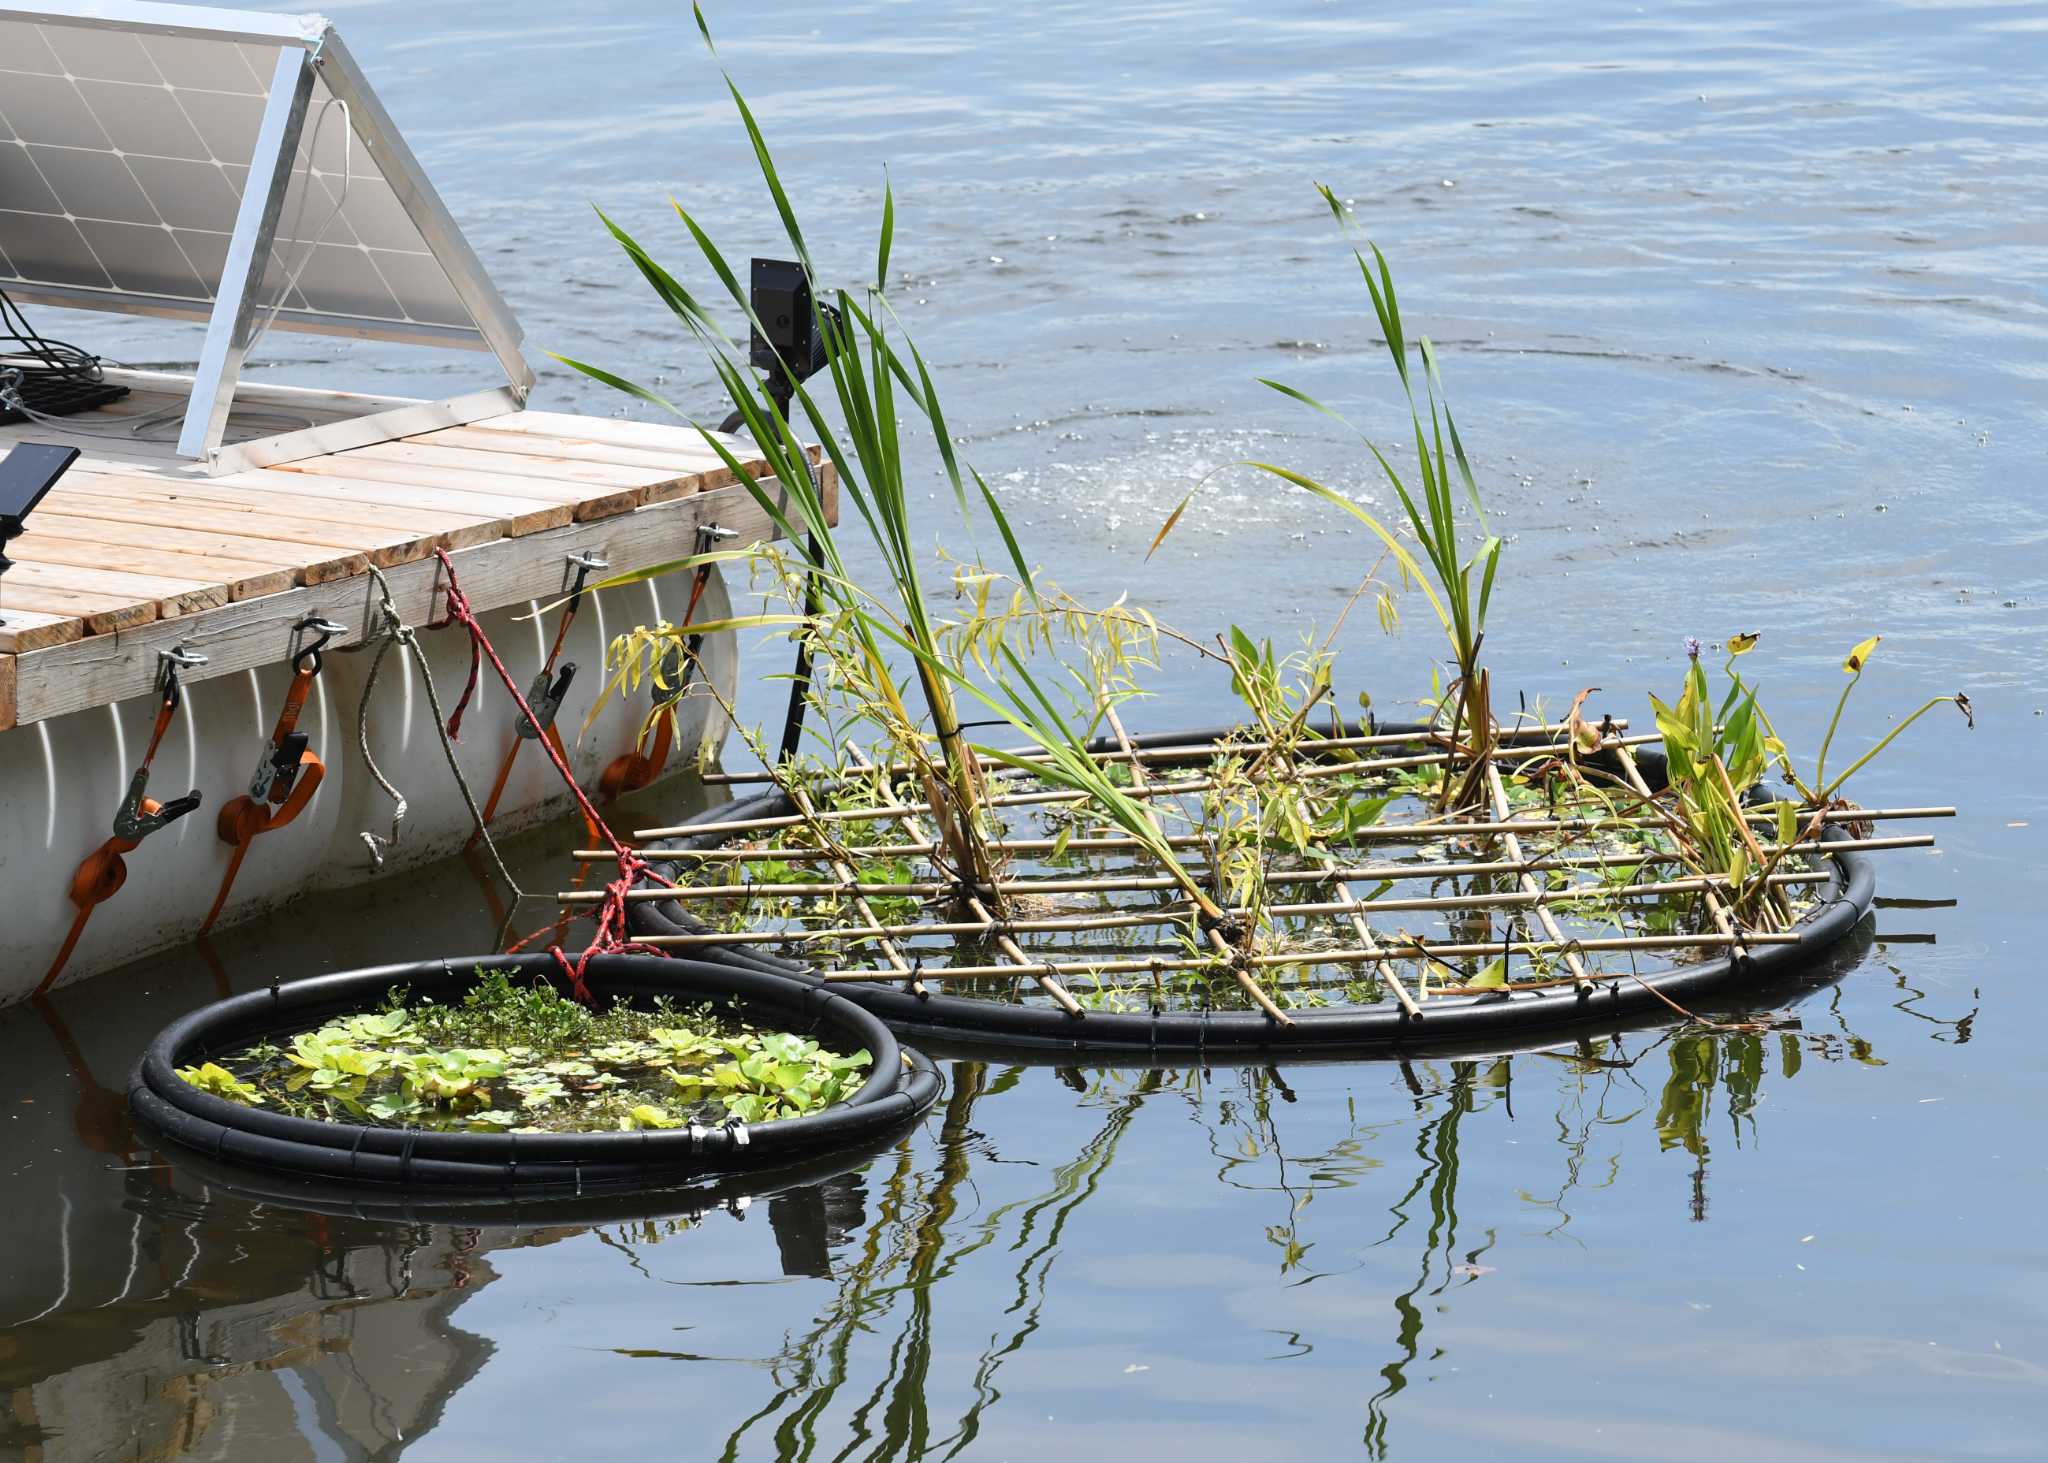 Fishermen use homemade styrofoam floating devices as boats